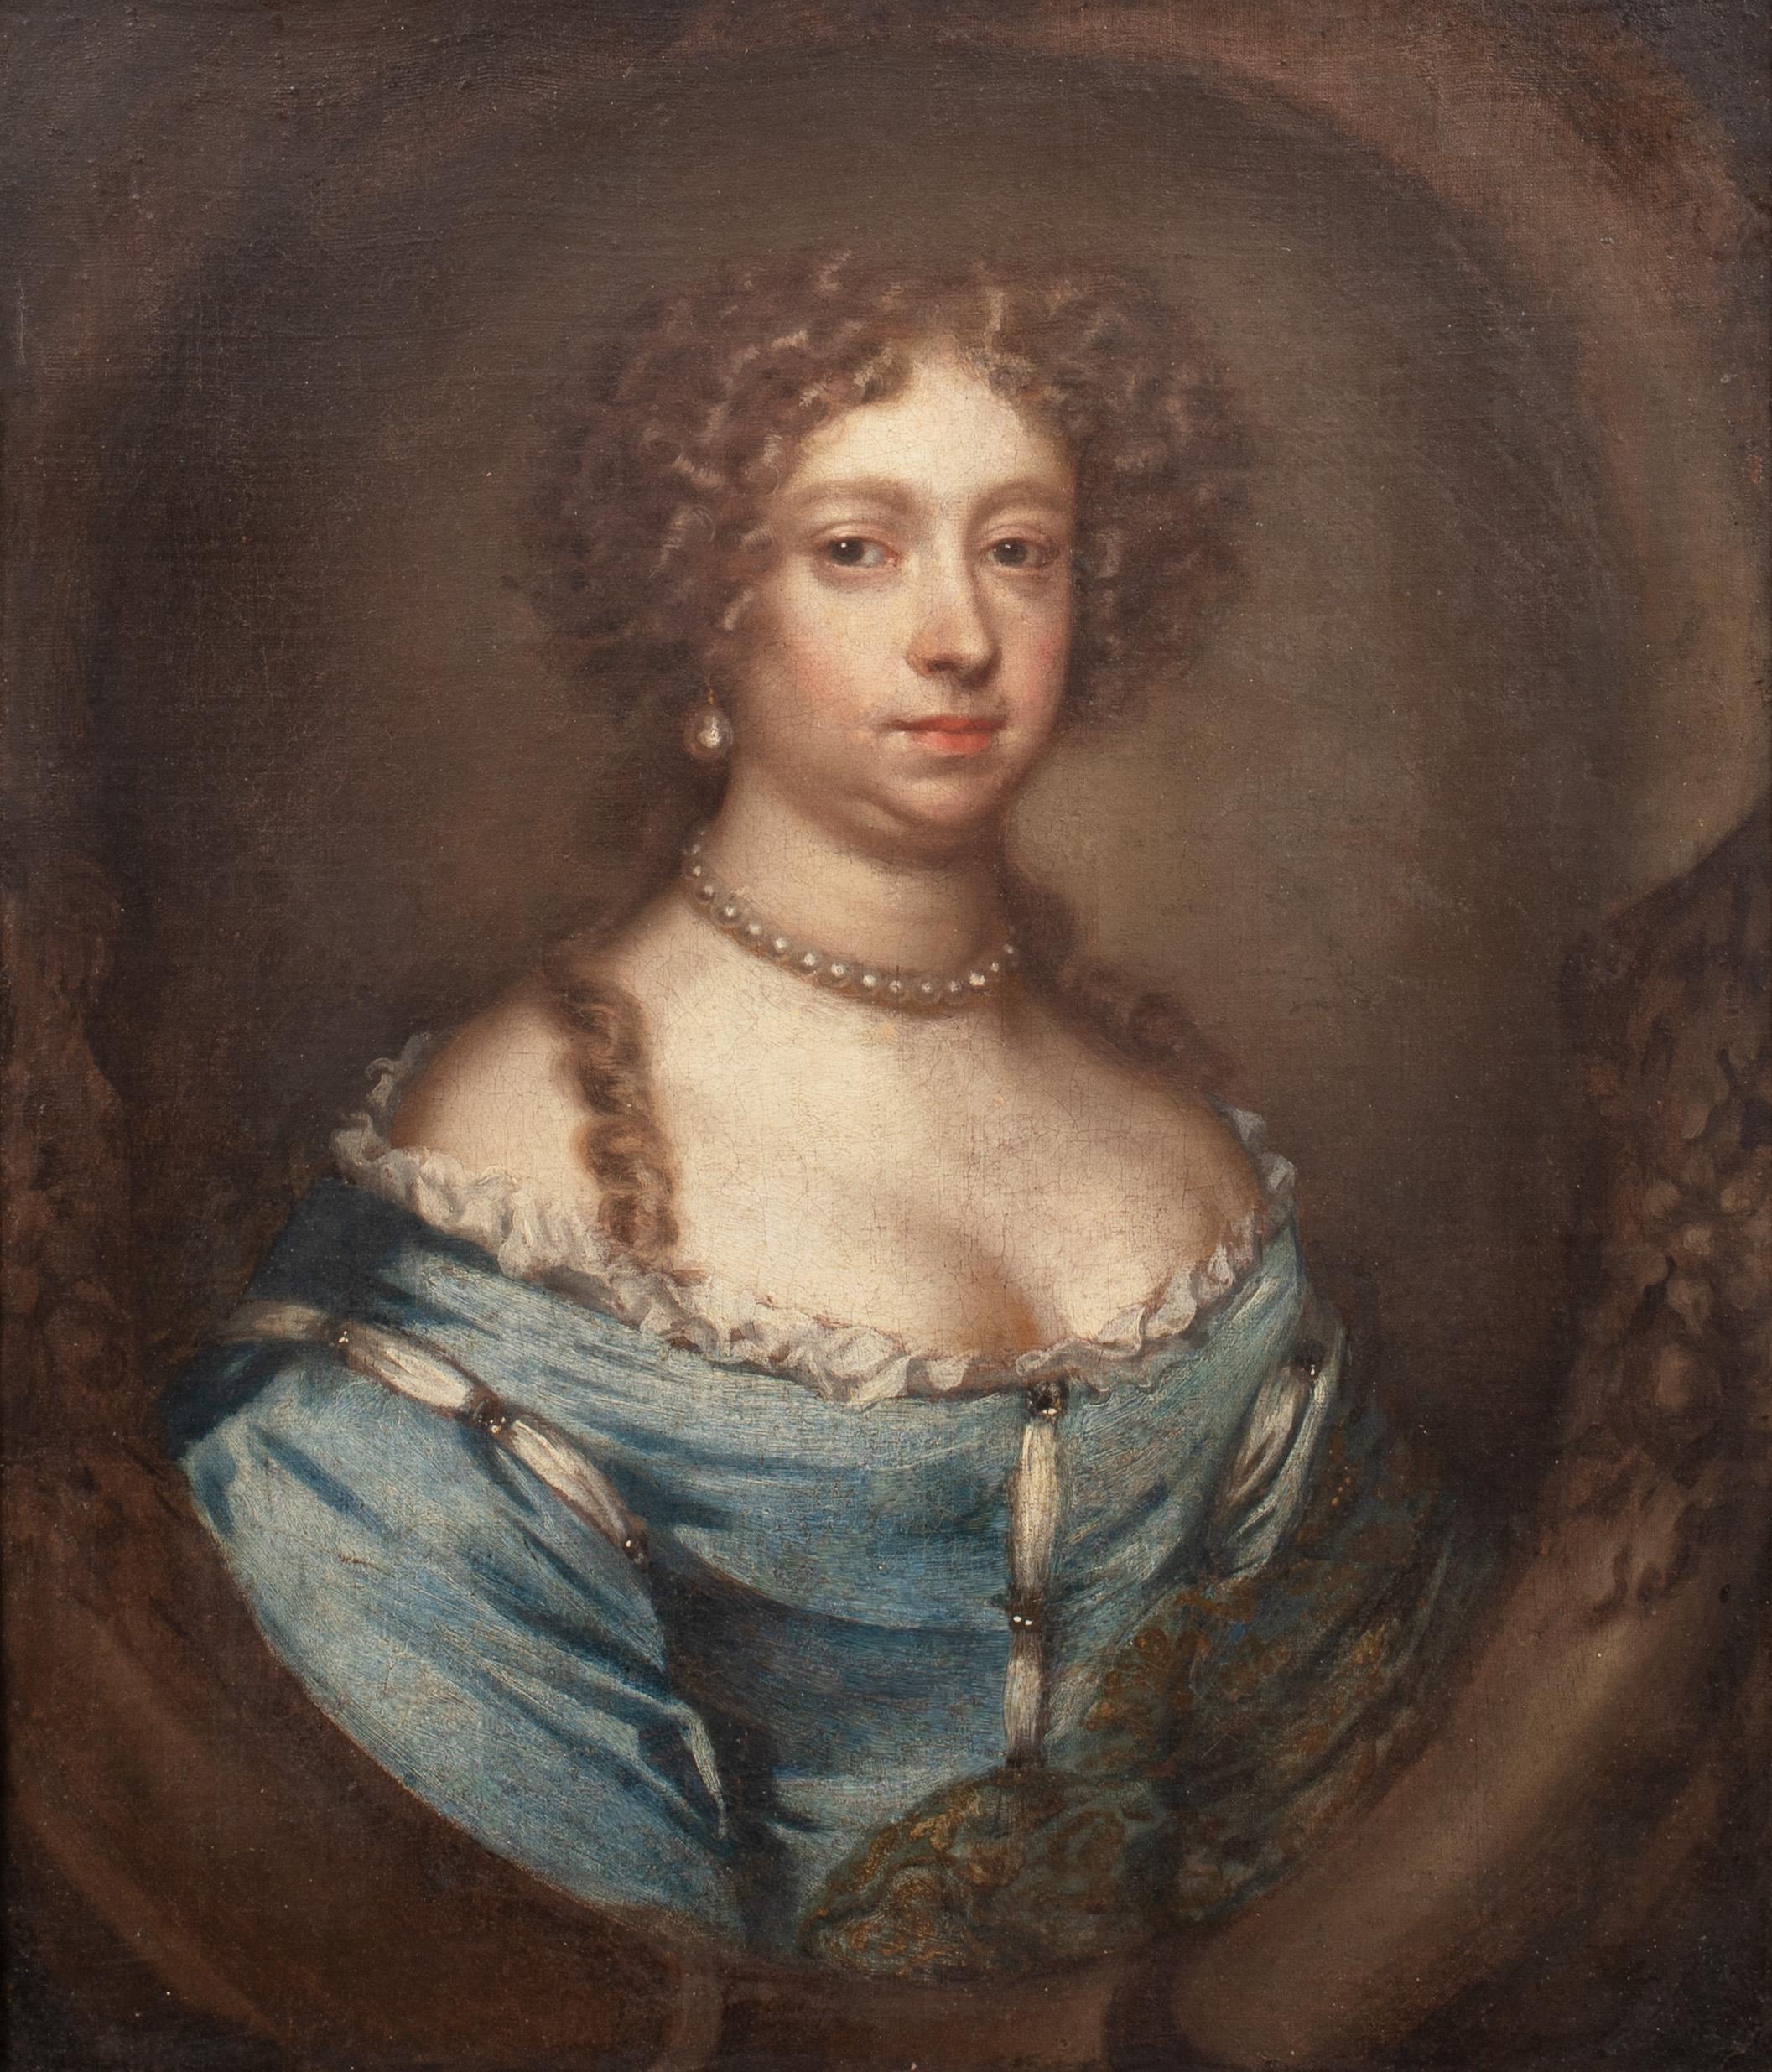 Portrait Of Essex Finch, Countess Of Nottingham, 17th Century 